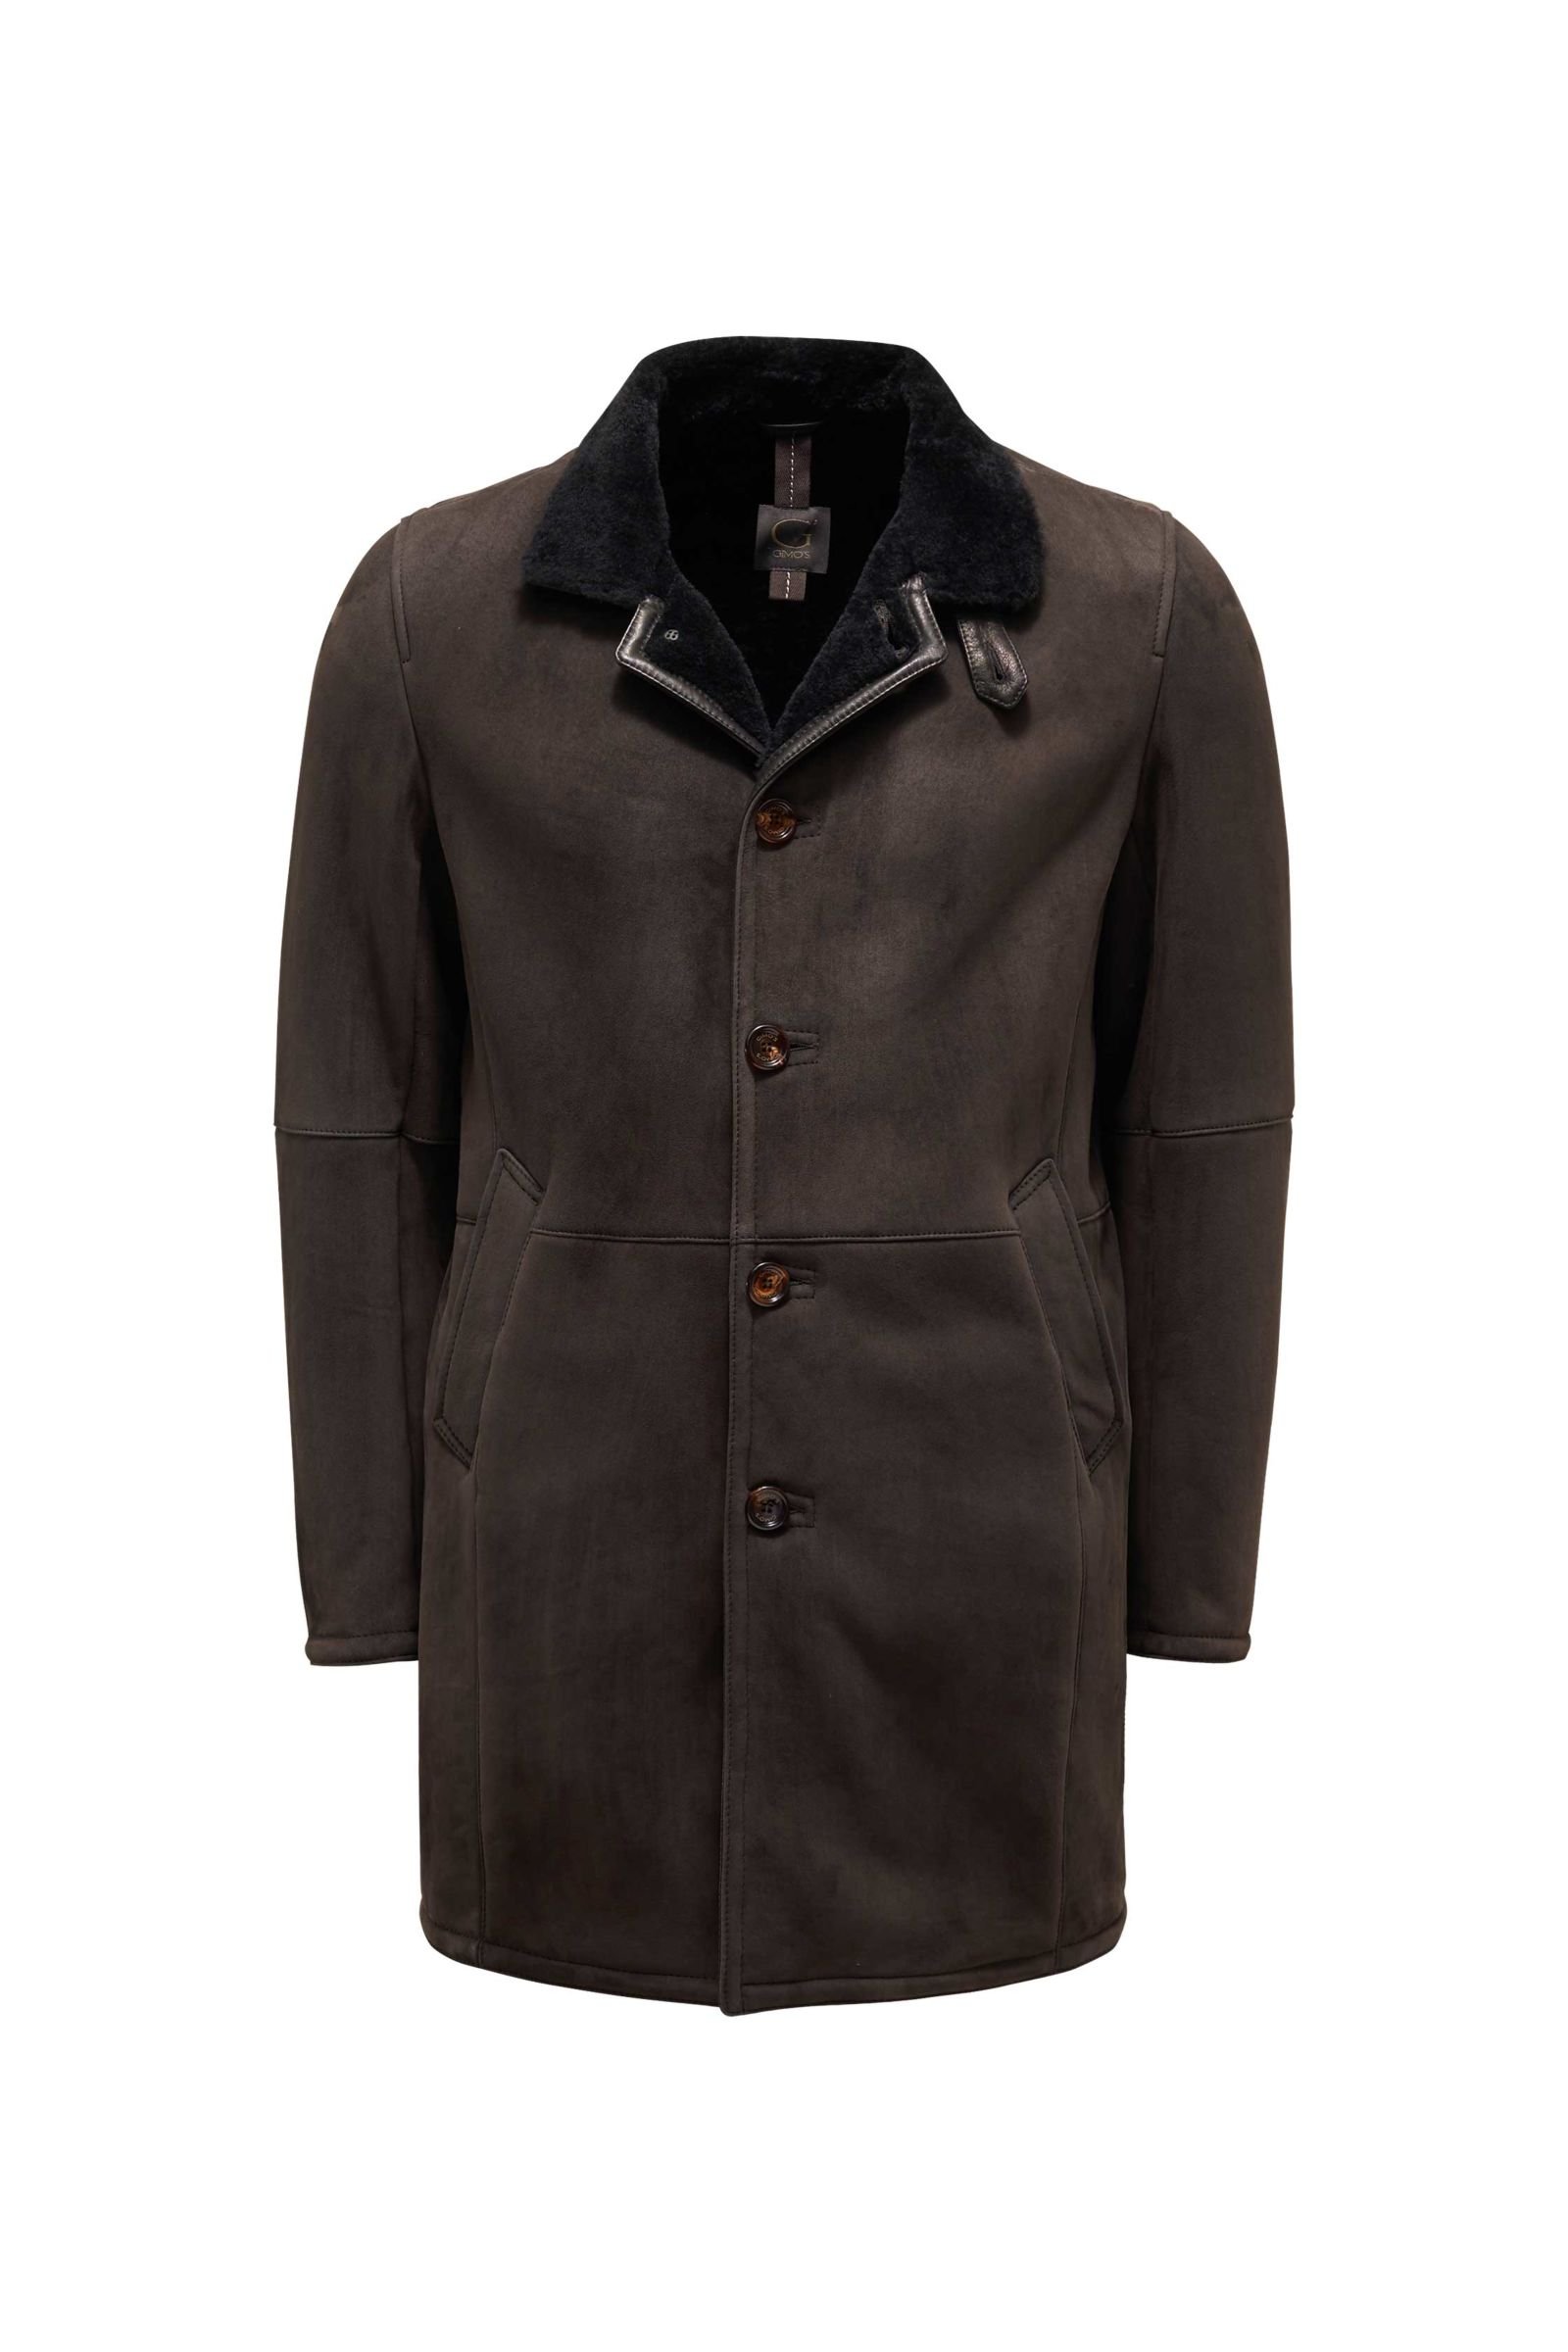 Shearling jacket dark brown